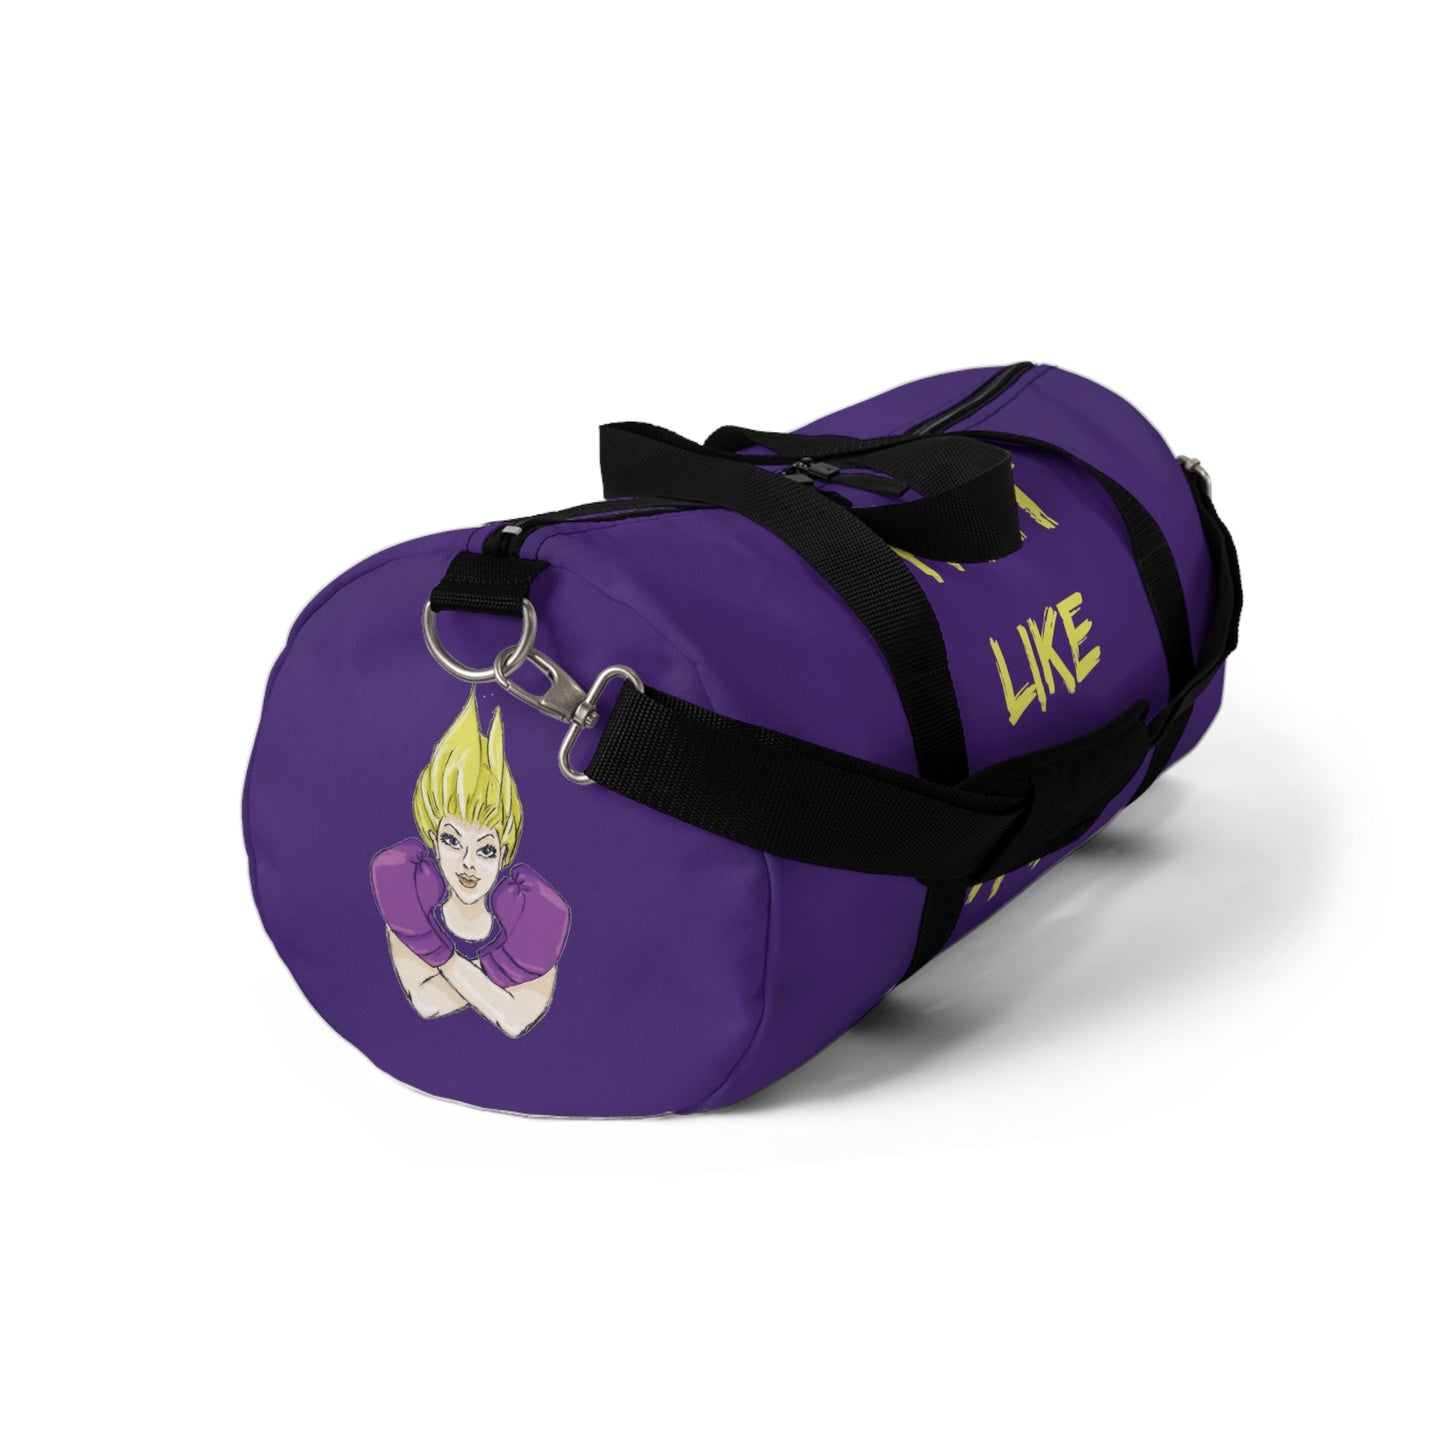 I FIGHT LIKE A GIRL Duffel Bag - Purple